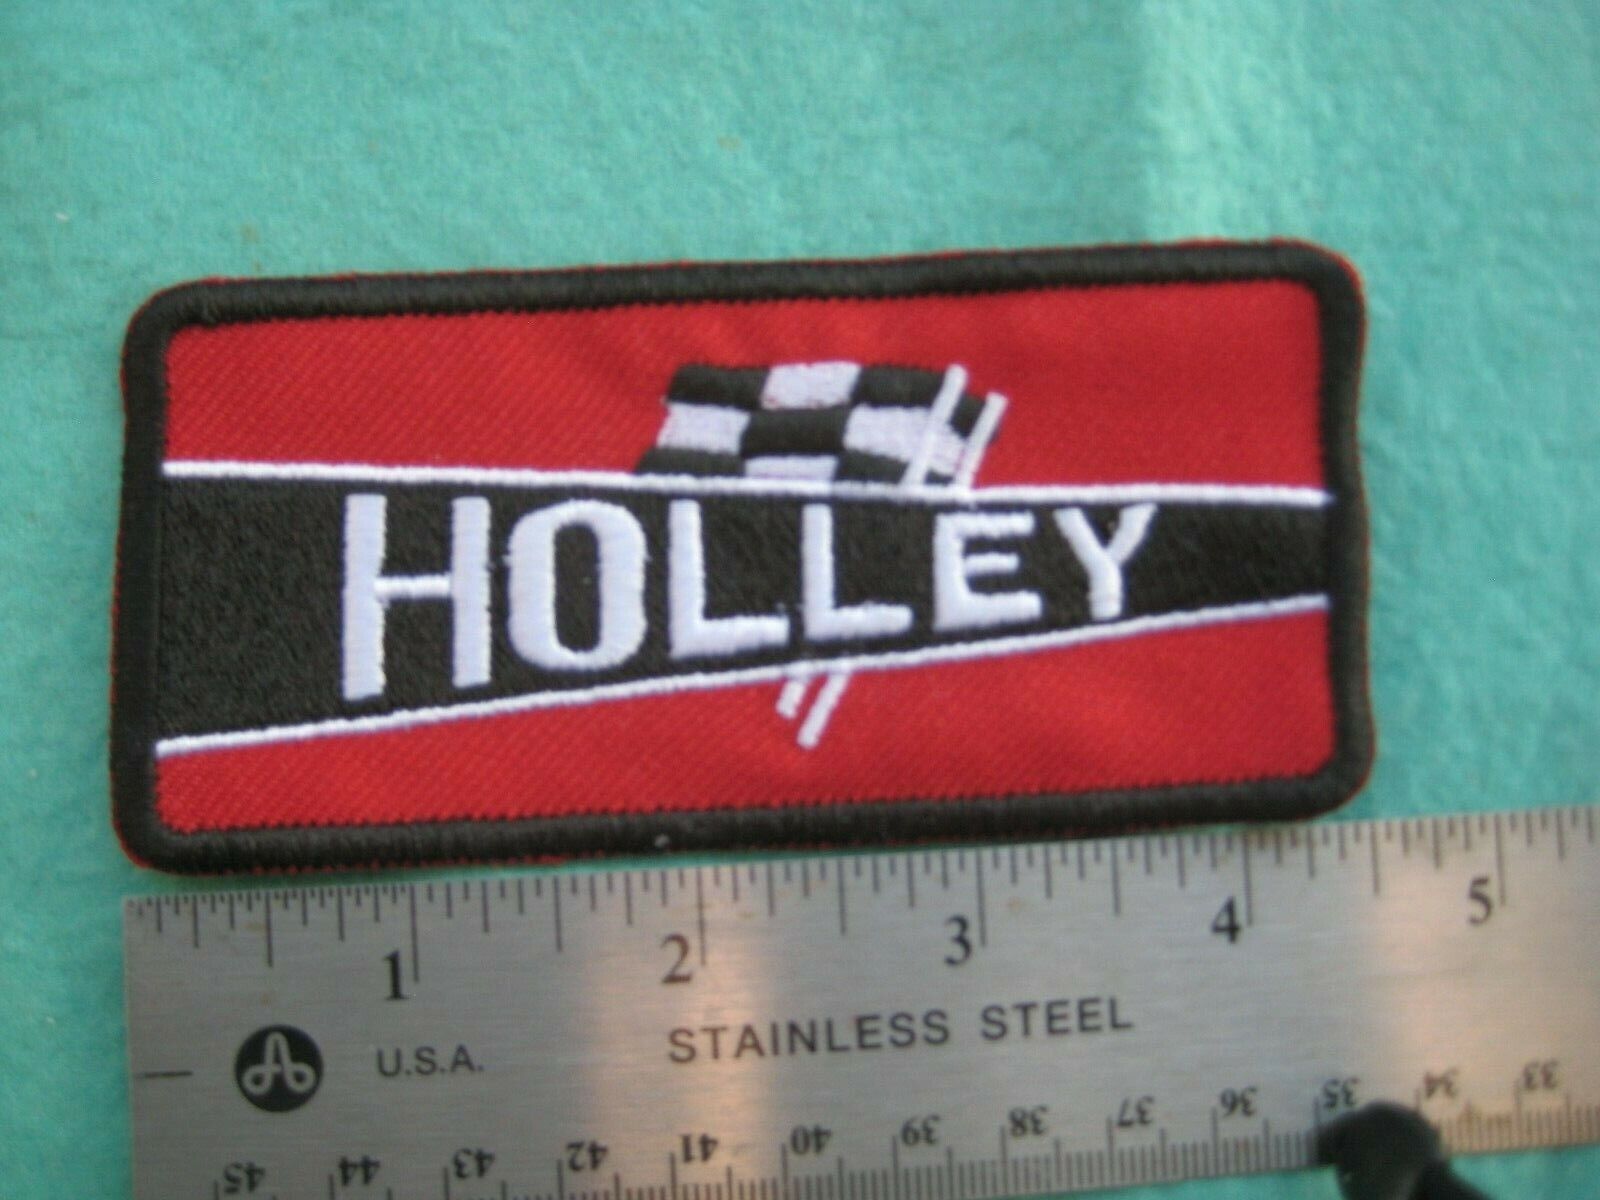 Holley  Speed Equipment Racing Team Service Parts Dealer   Uniform Patch